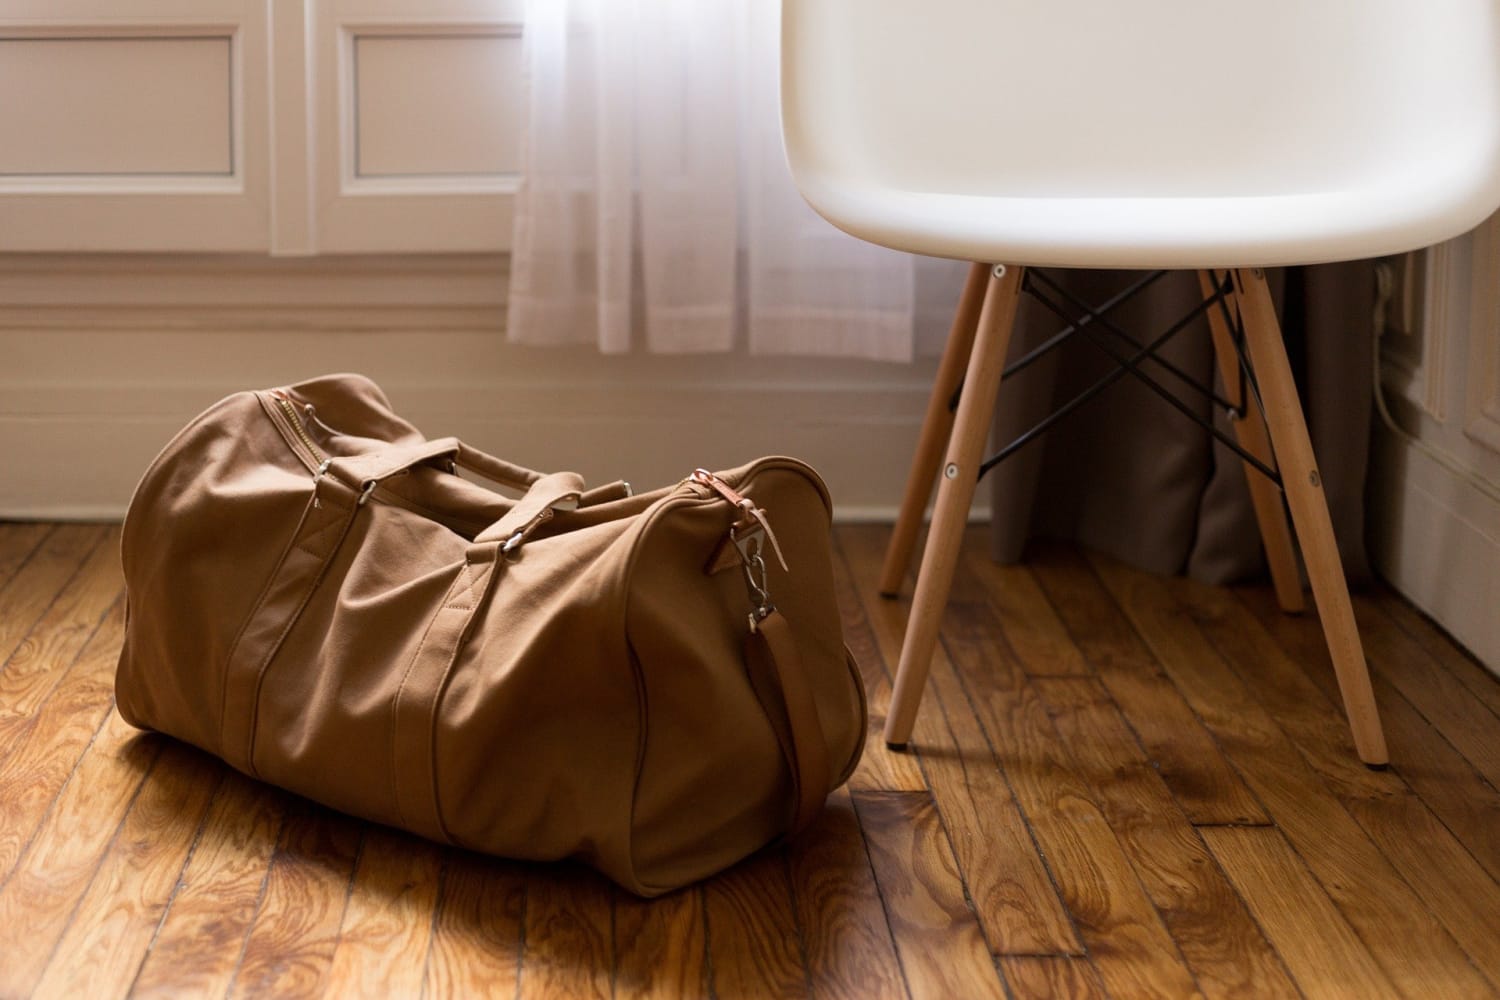 Bayfield Bags Toiletries Bag Mens Leather–Dopp Kit-Genuine Brown Oiled Leather-Mens Travel Toiletries Bag